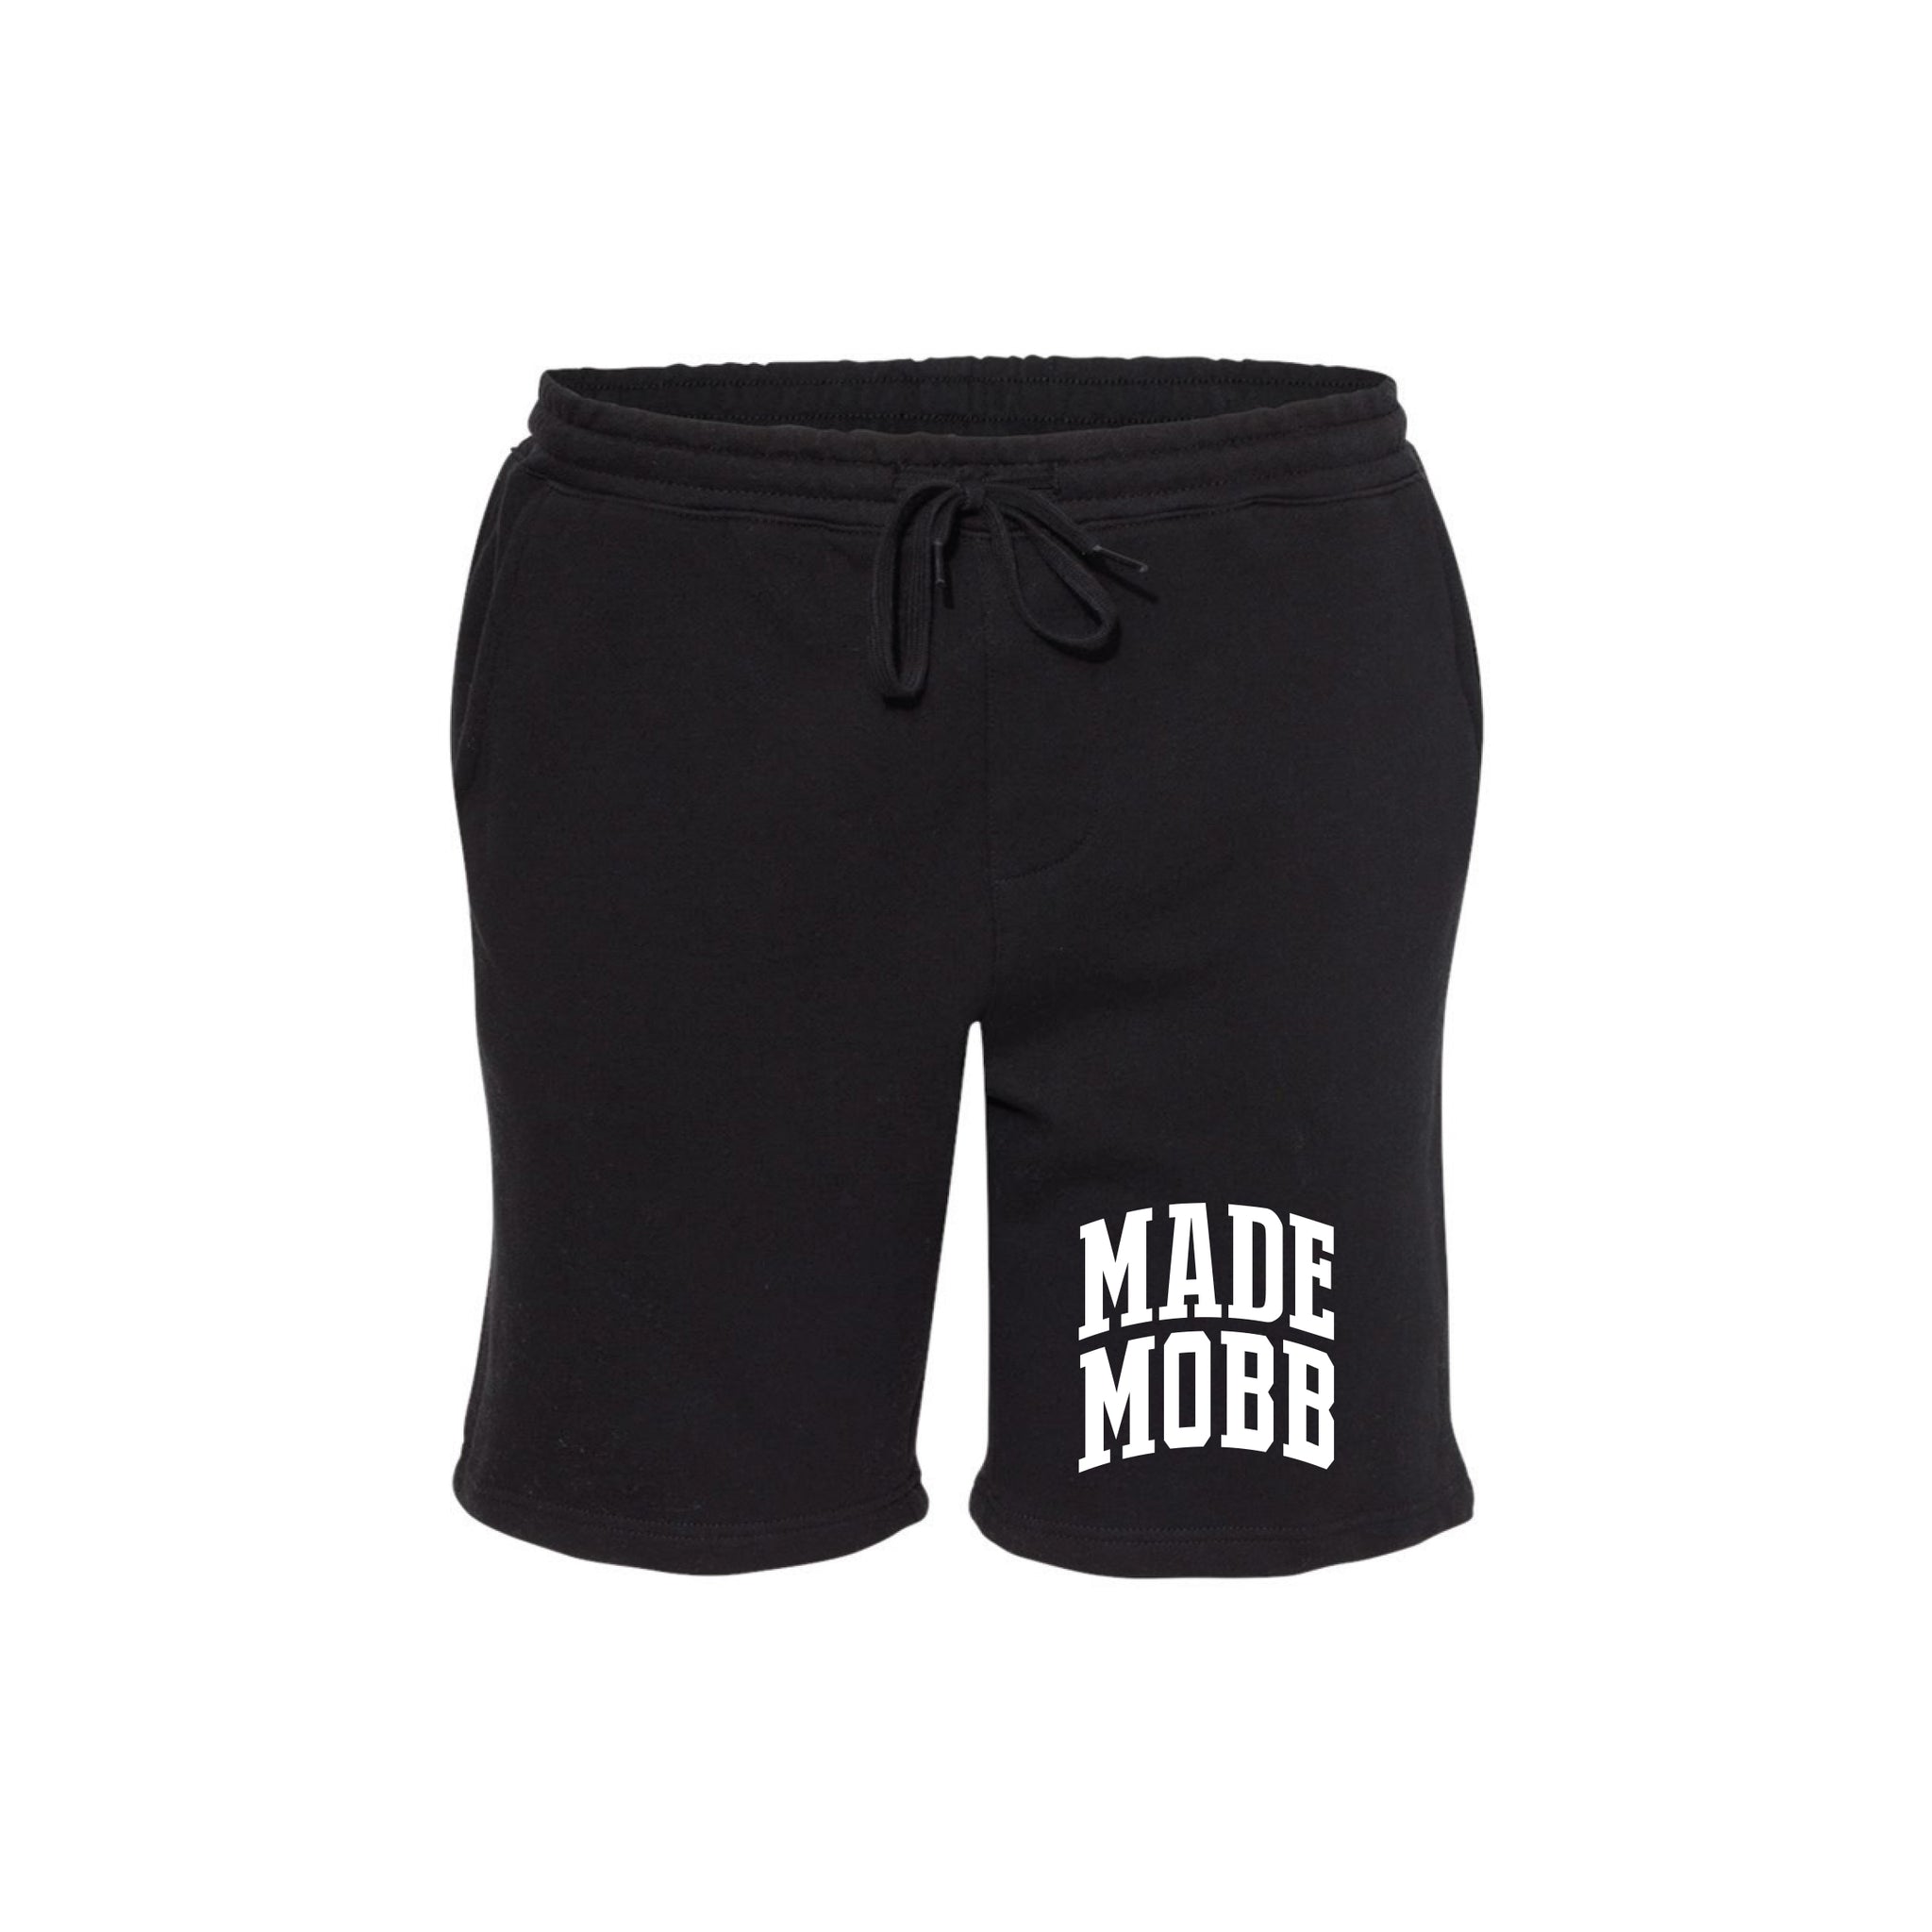 MADE MOBB Shorts - Black